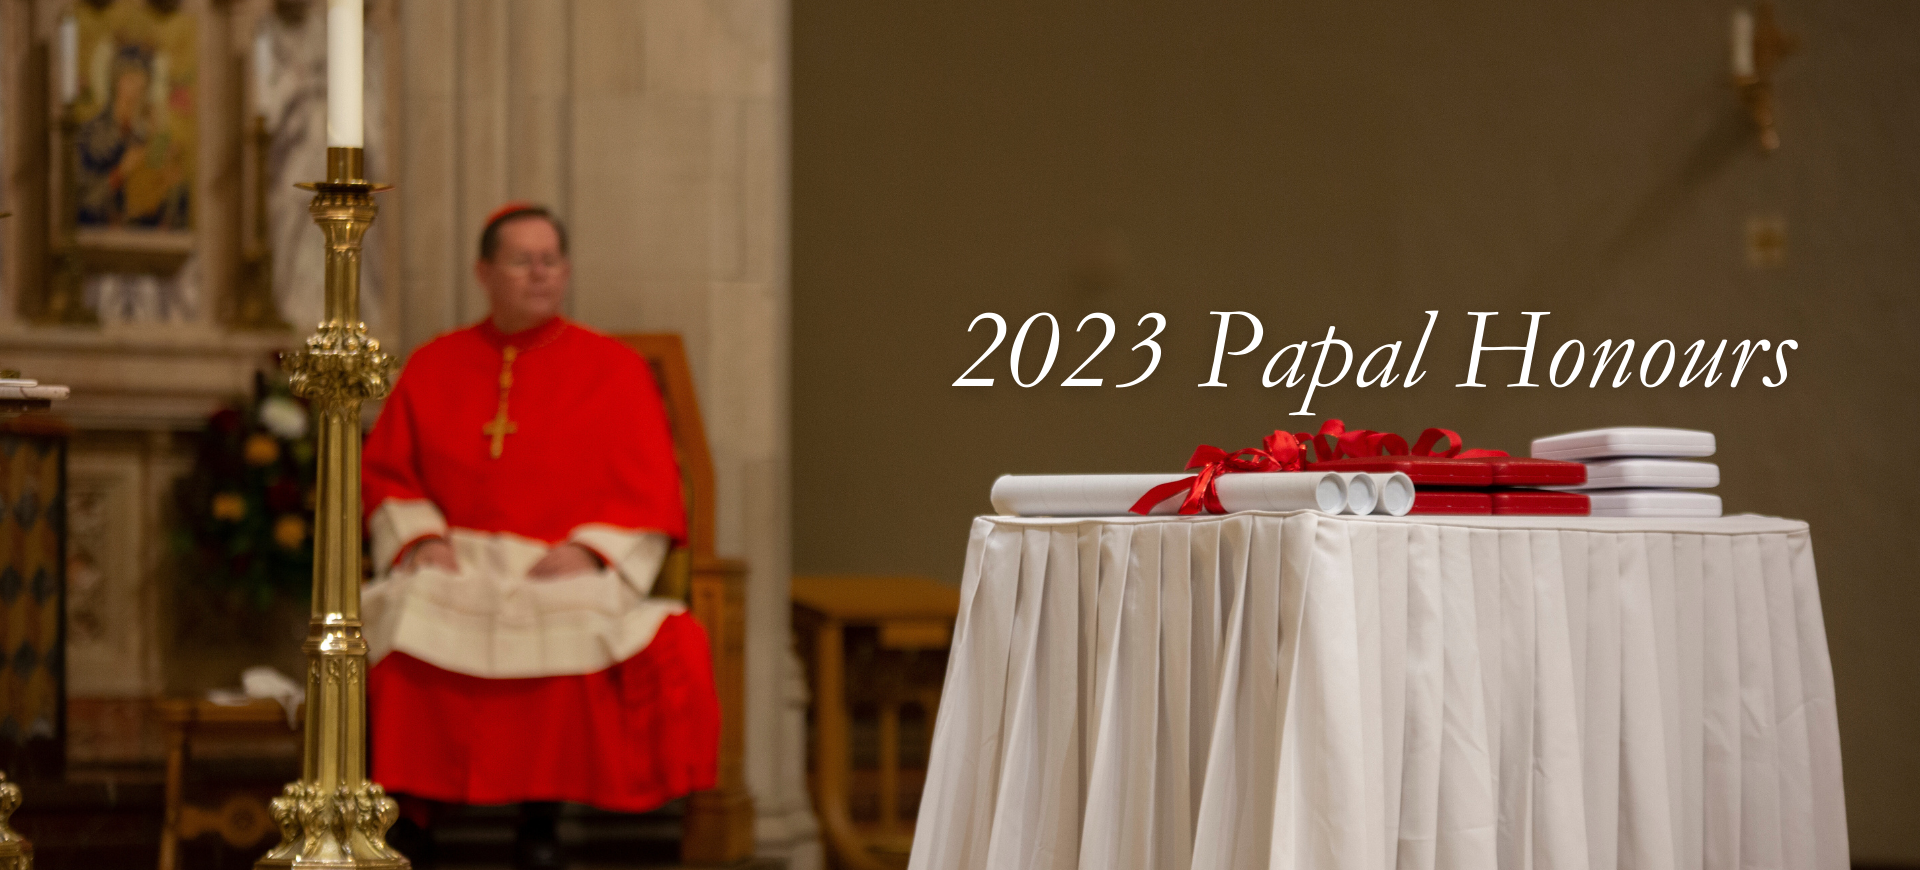 Papal Honours 2023